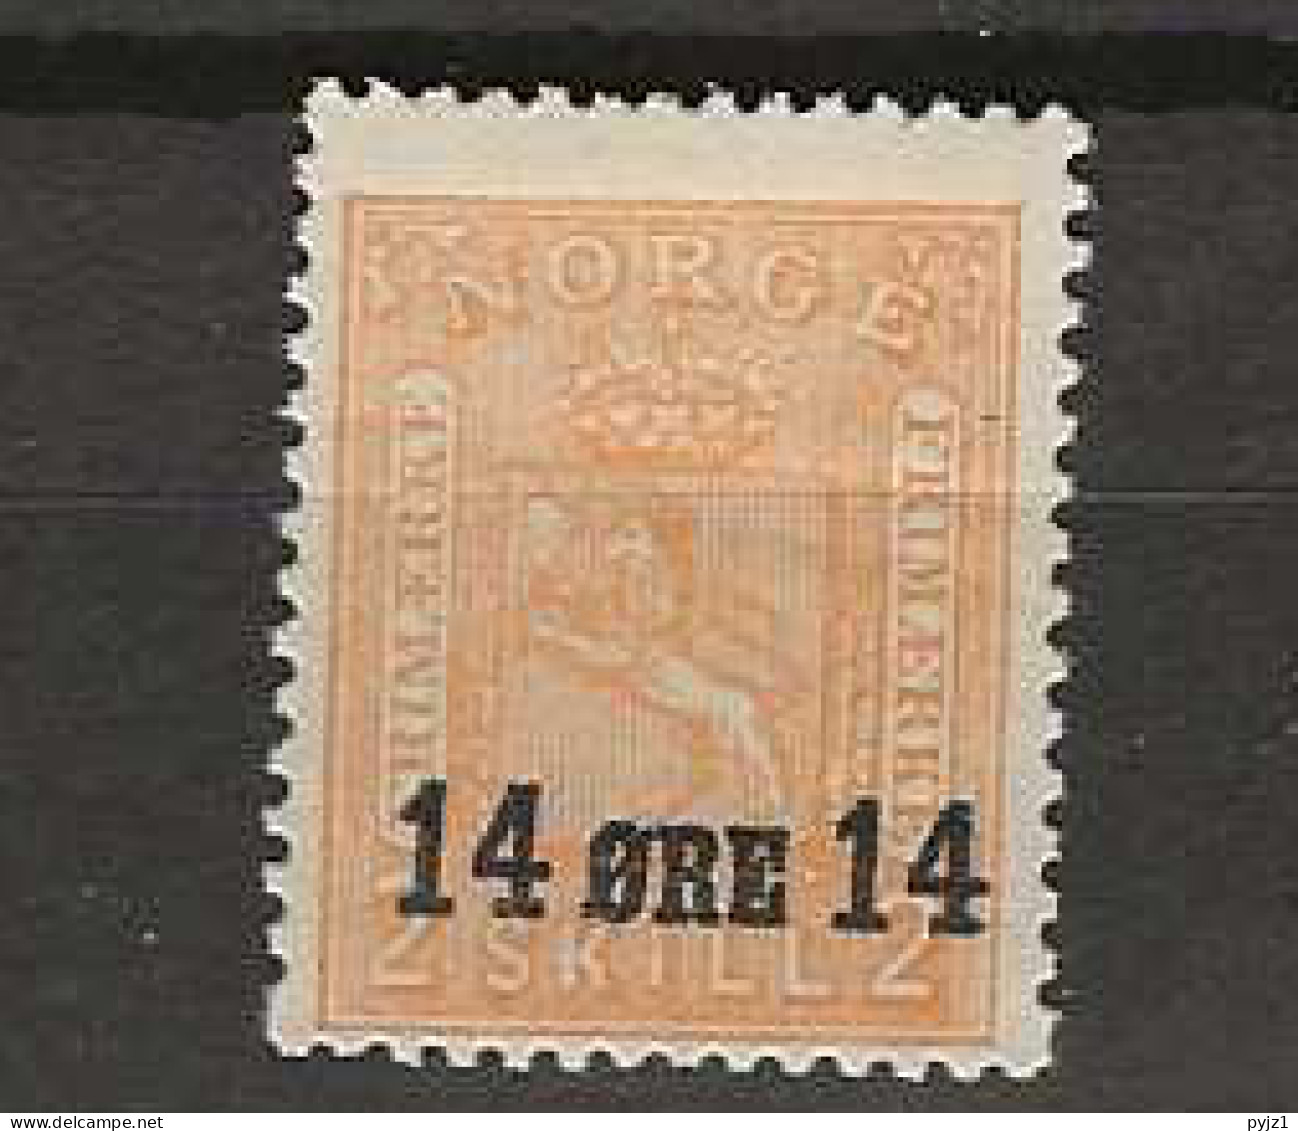 1929 MNH Norway Mi 154 Postfris** - Neufs